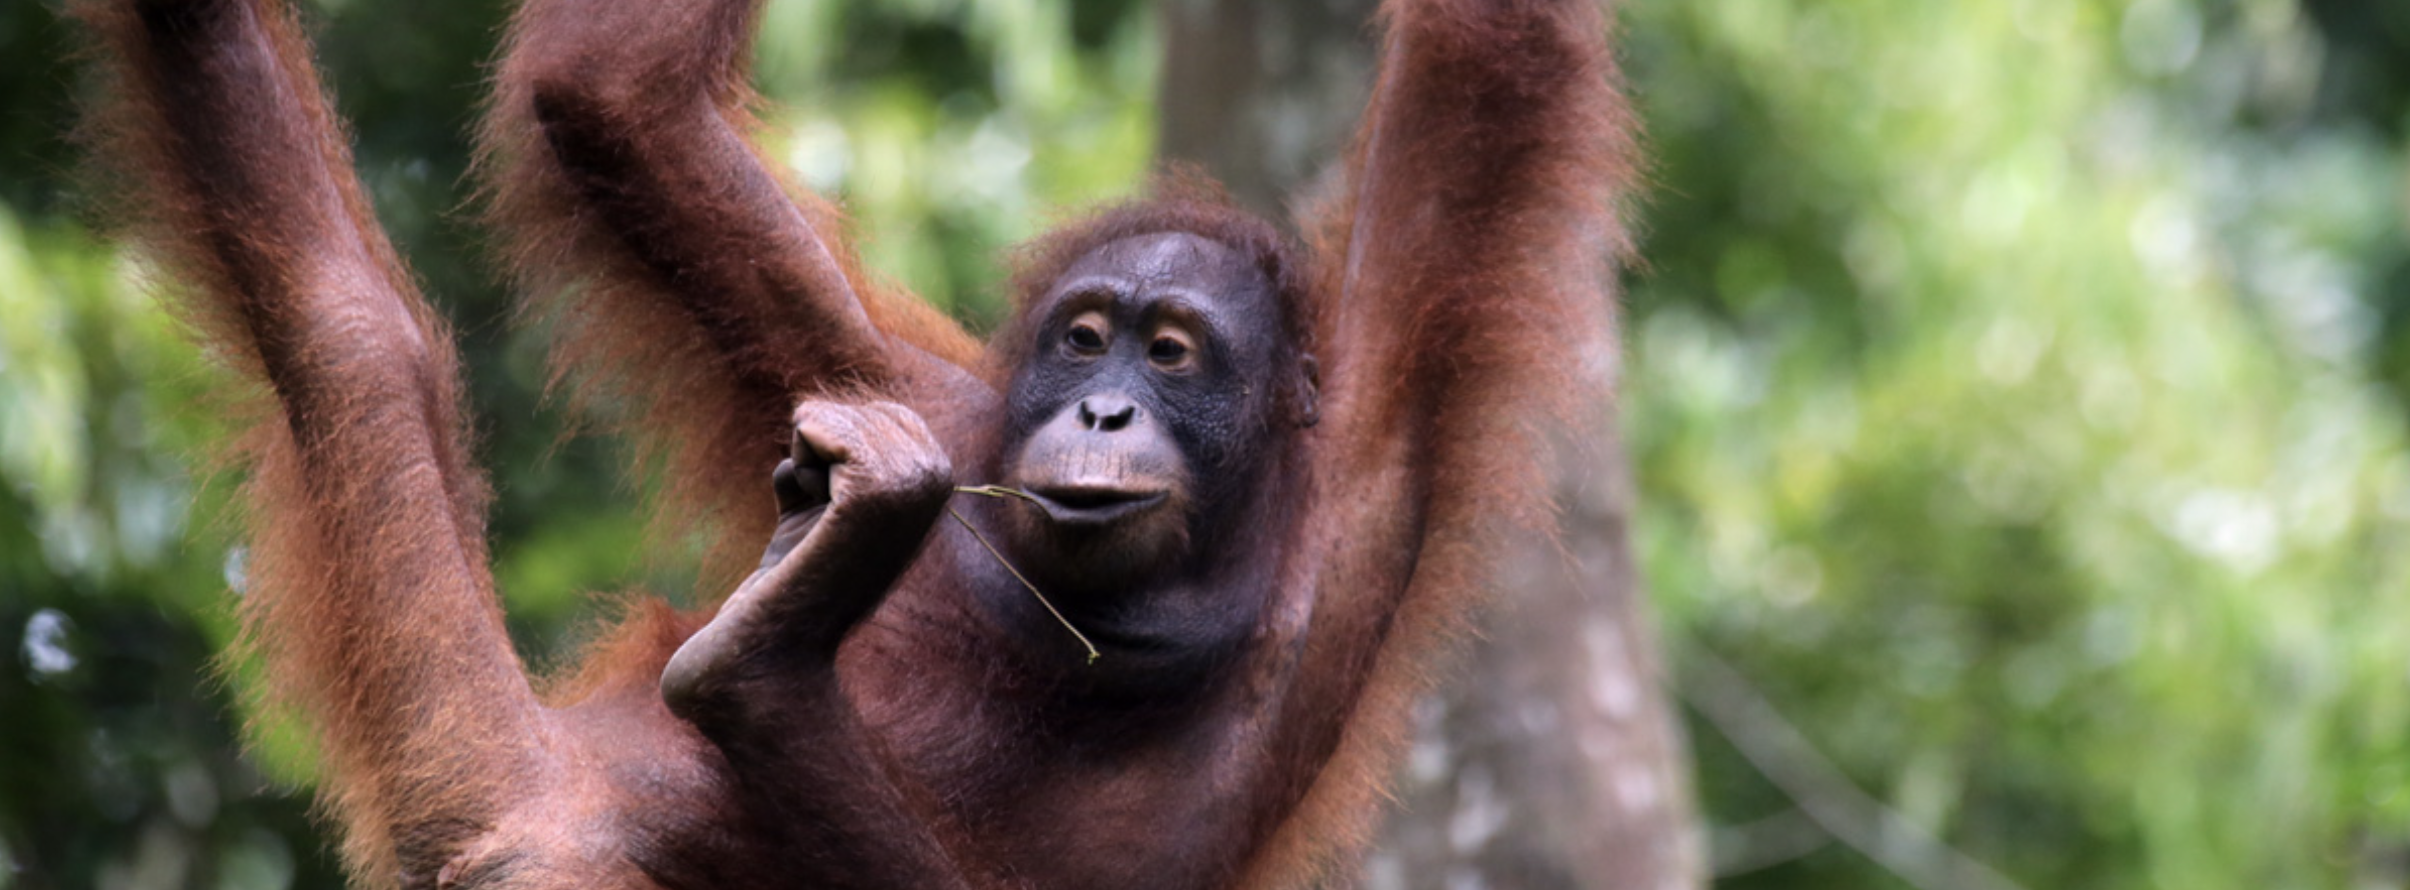 Borneo orangutan at Sepilok Rehabilitation Center in Sabah, Borneo. Image by Rhett A. Butler.